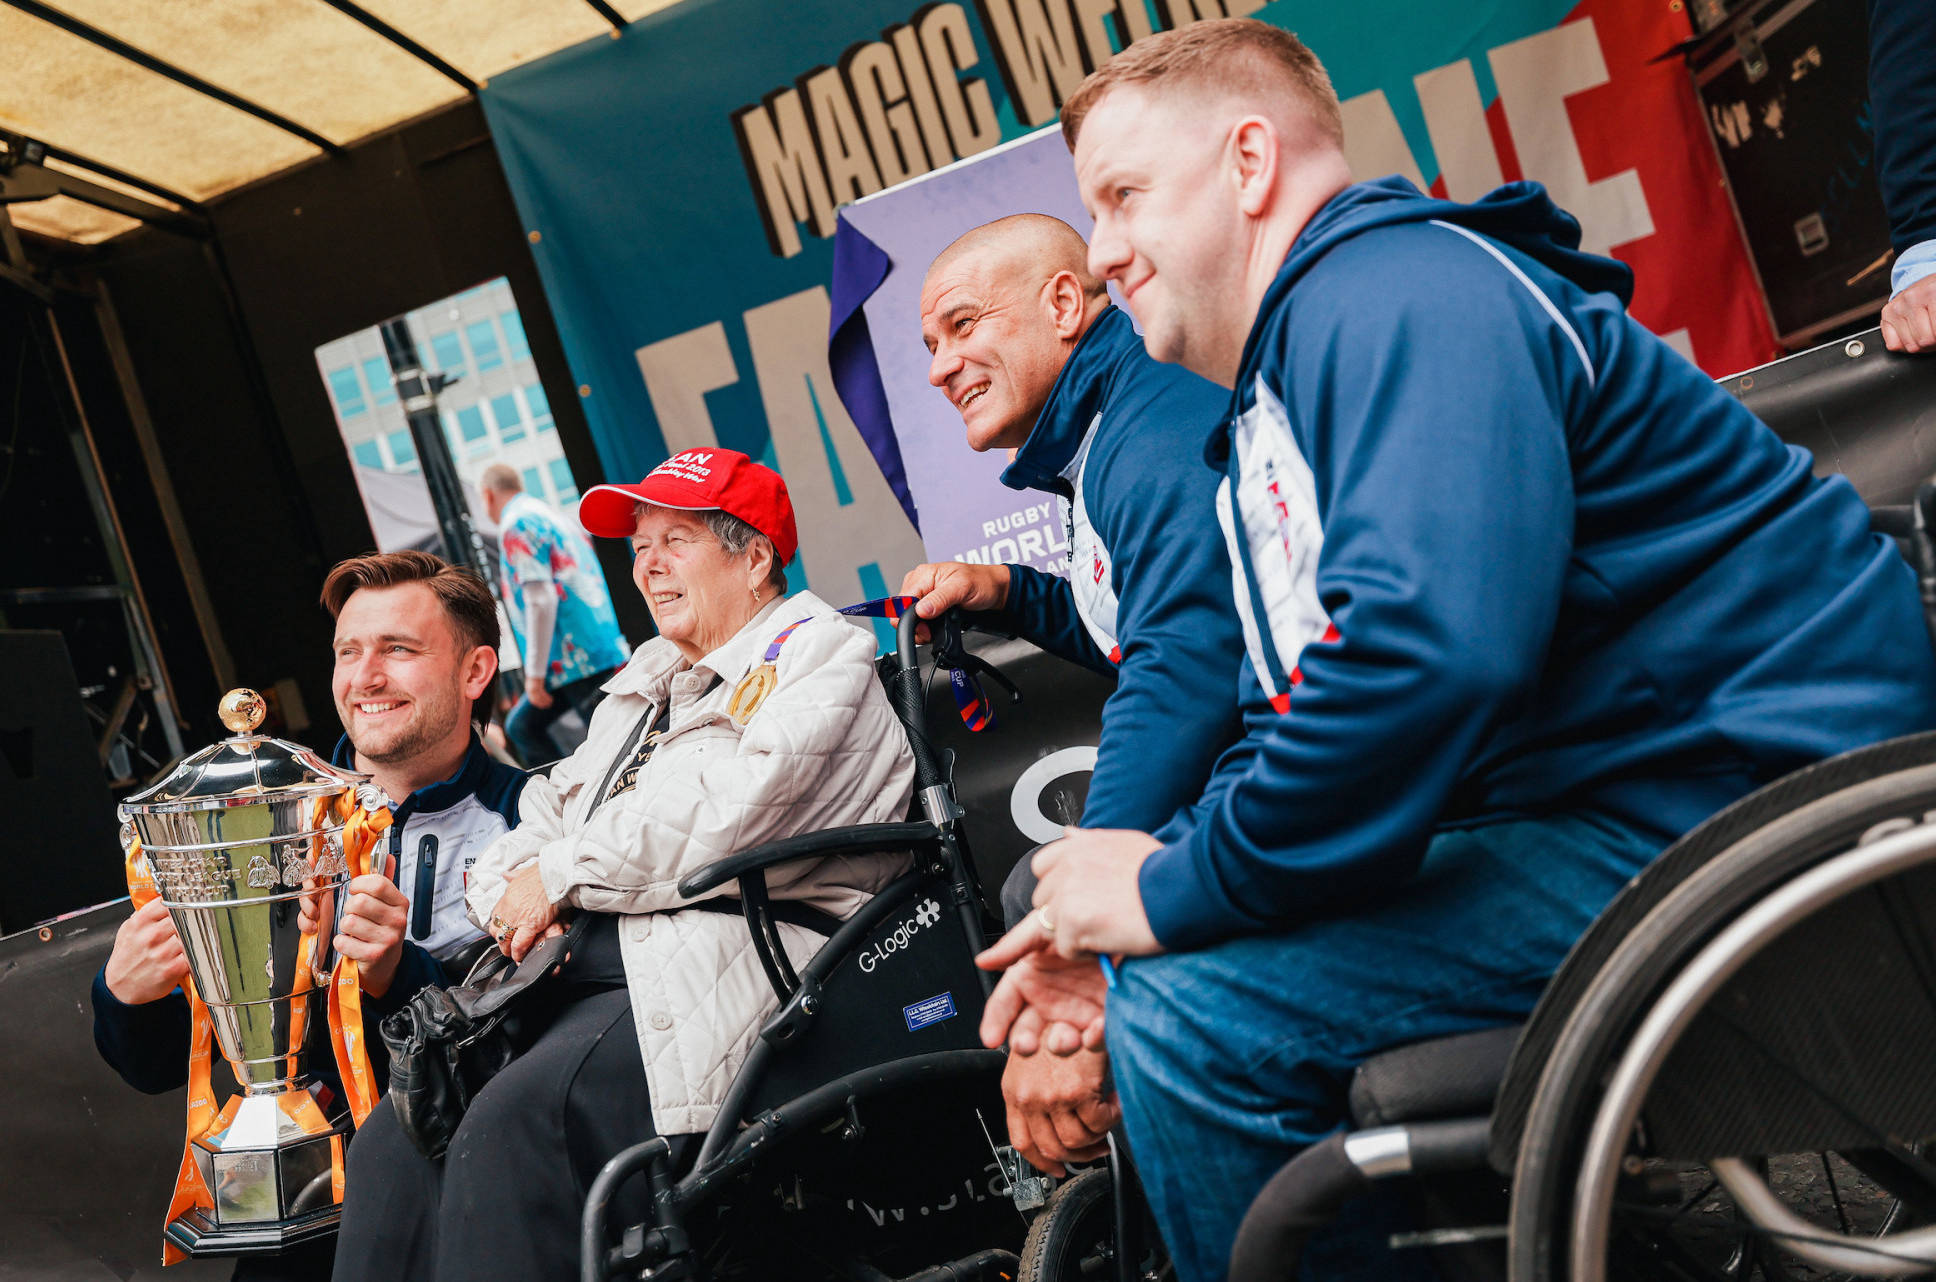 England Wheelchair to kick off Sunday triple header in York